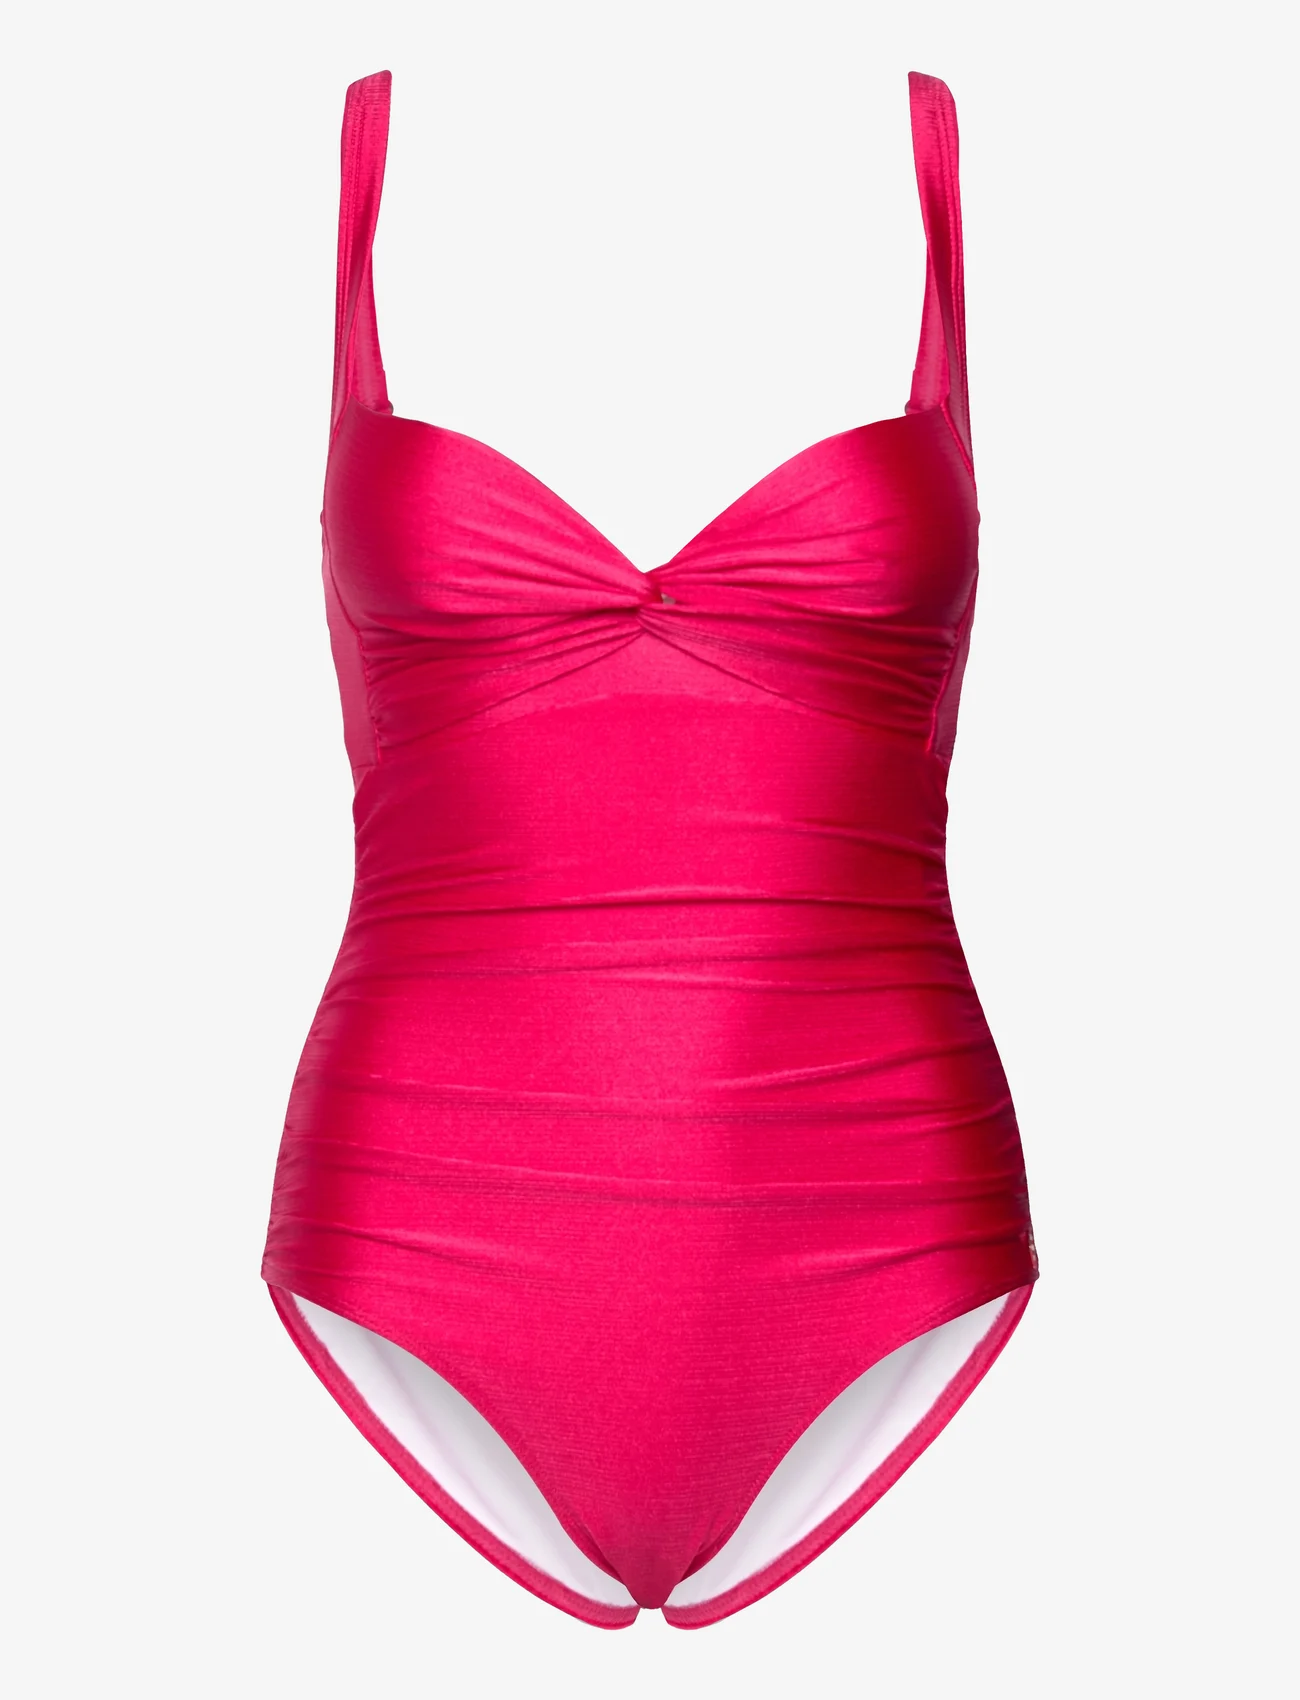 Panos Emporio - Rose Verona Swimsuit - baddräkter - rose red - 0